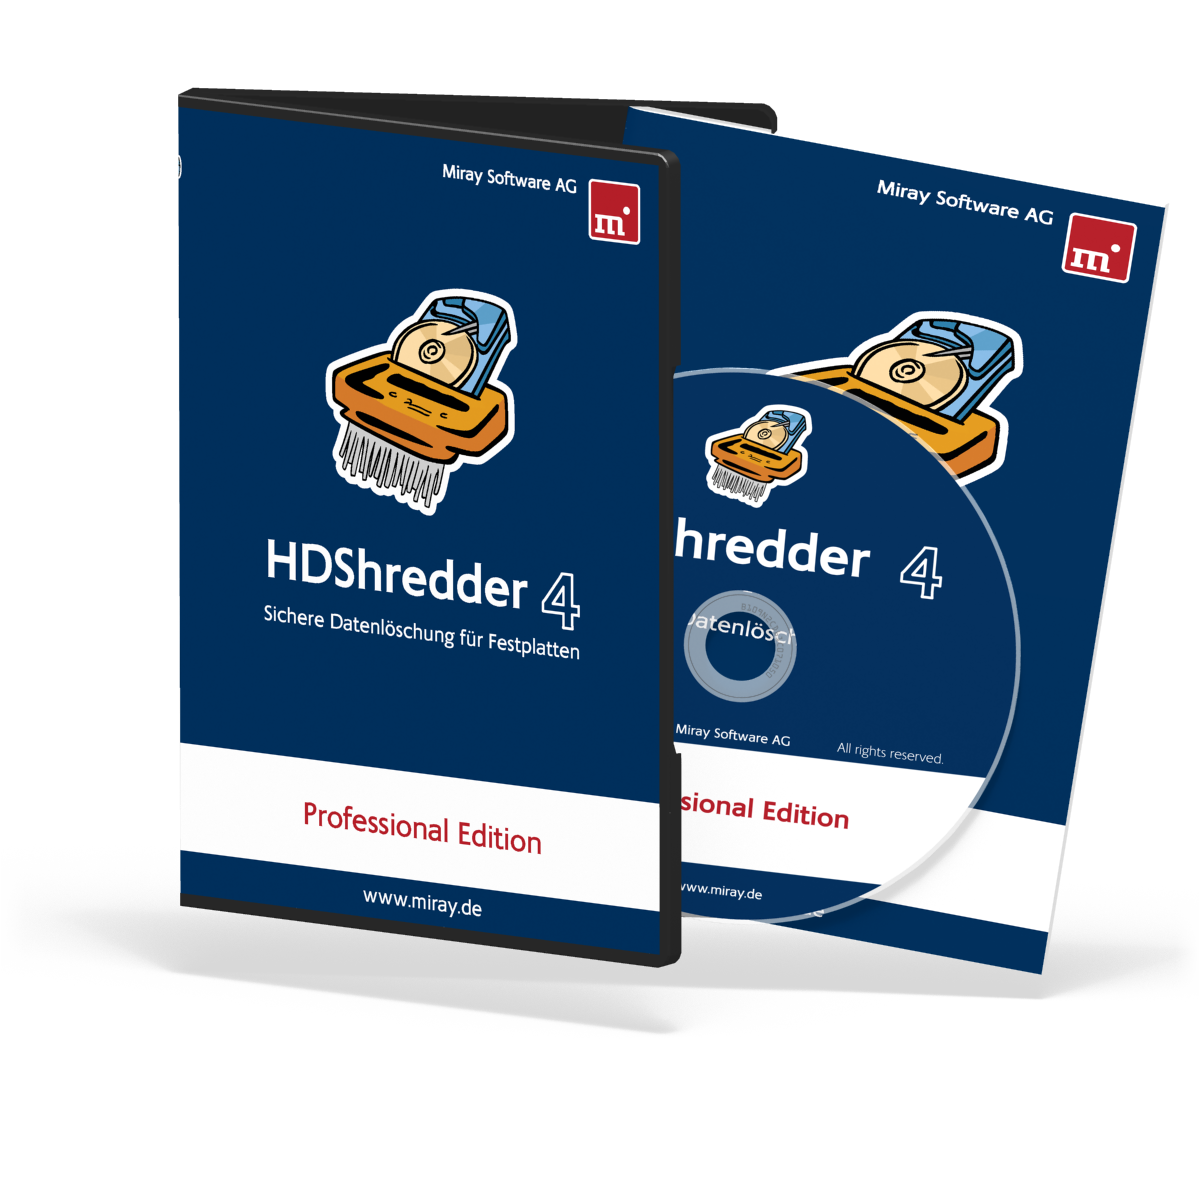 miray hdshredder 4.0.2 professional retail